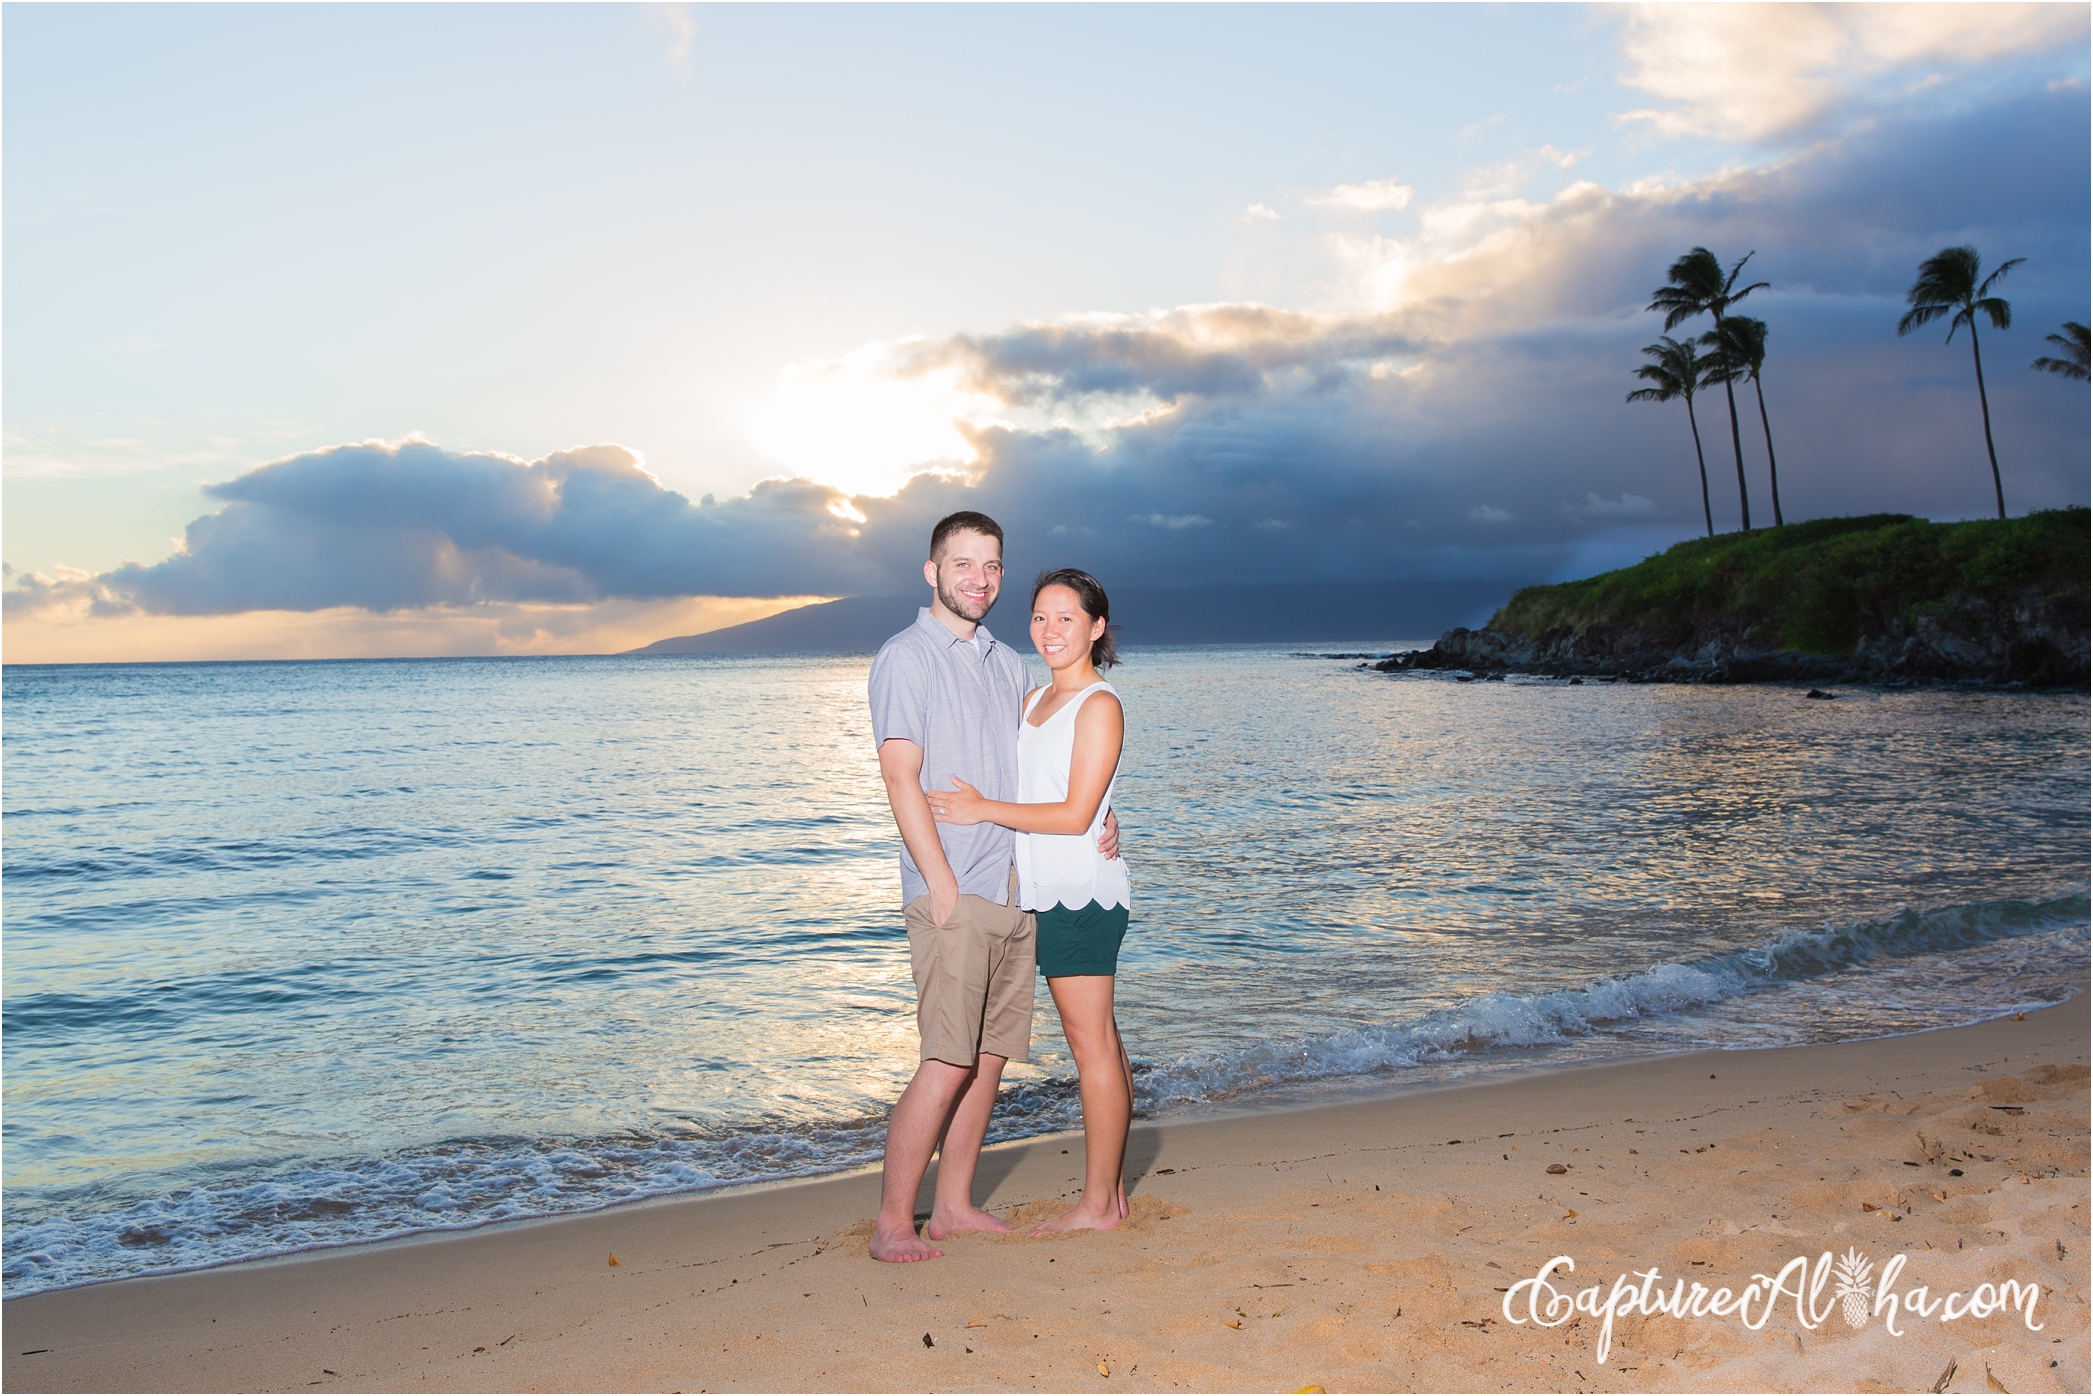 Maui Engagement Photography at Kapalua Bay during sunset